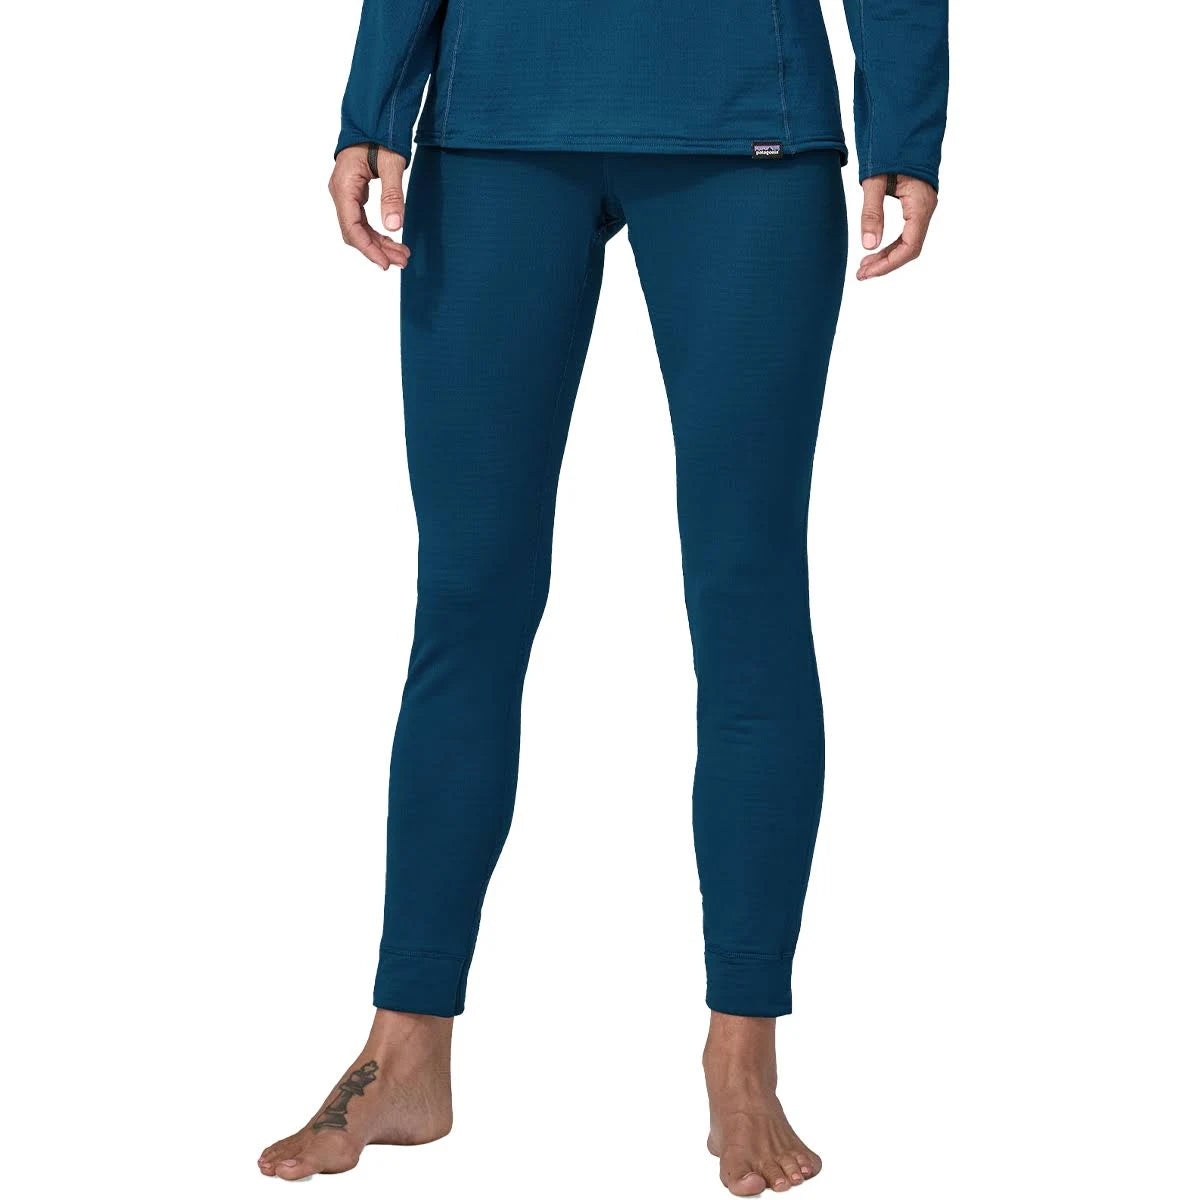 Patagonia Capilene® Thermal Weight Pants - Women's